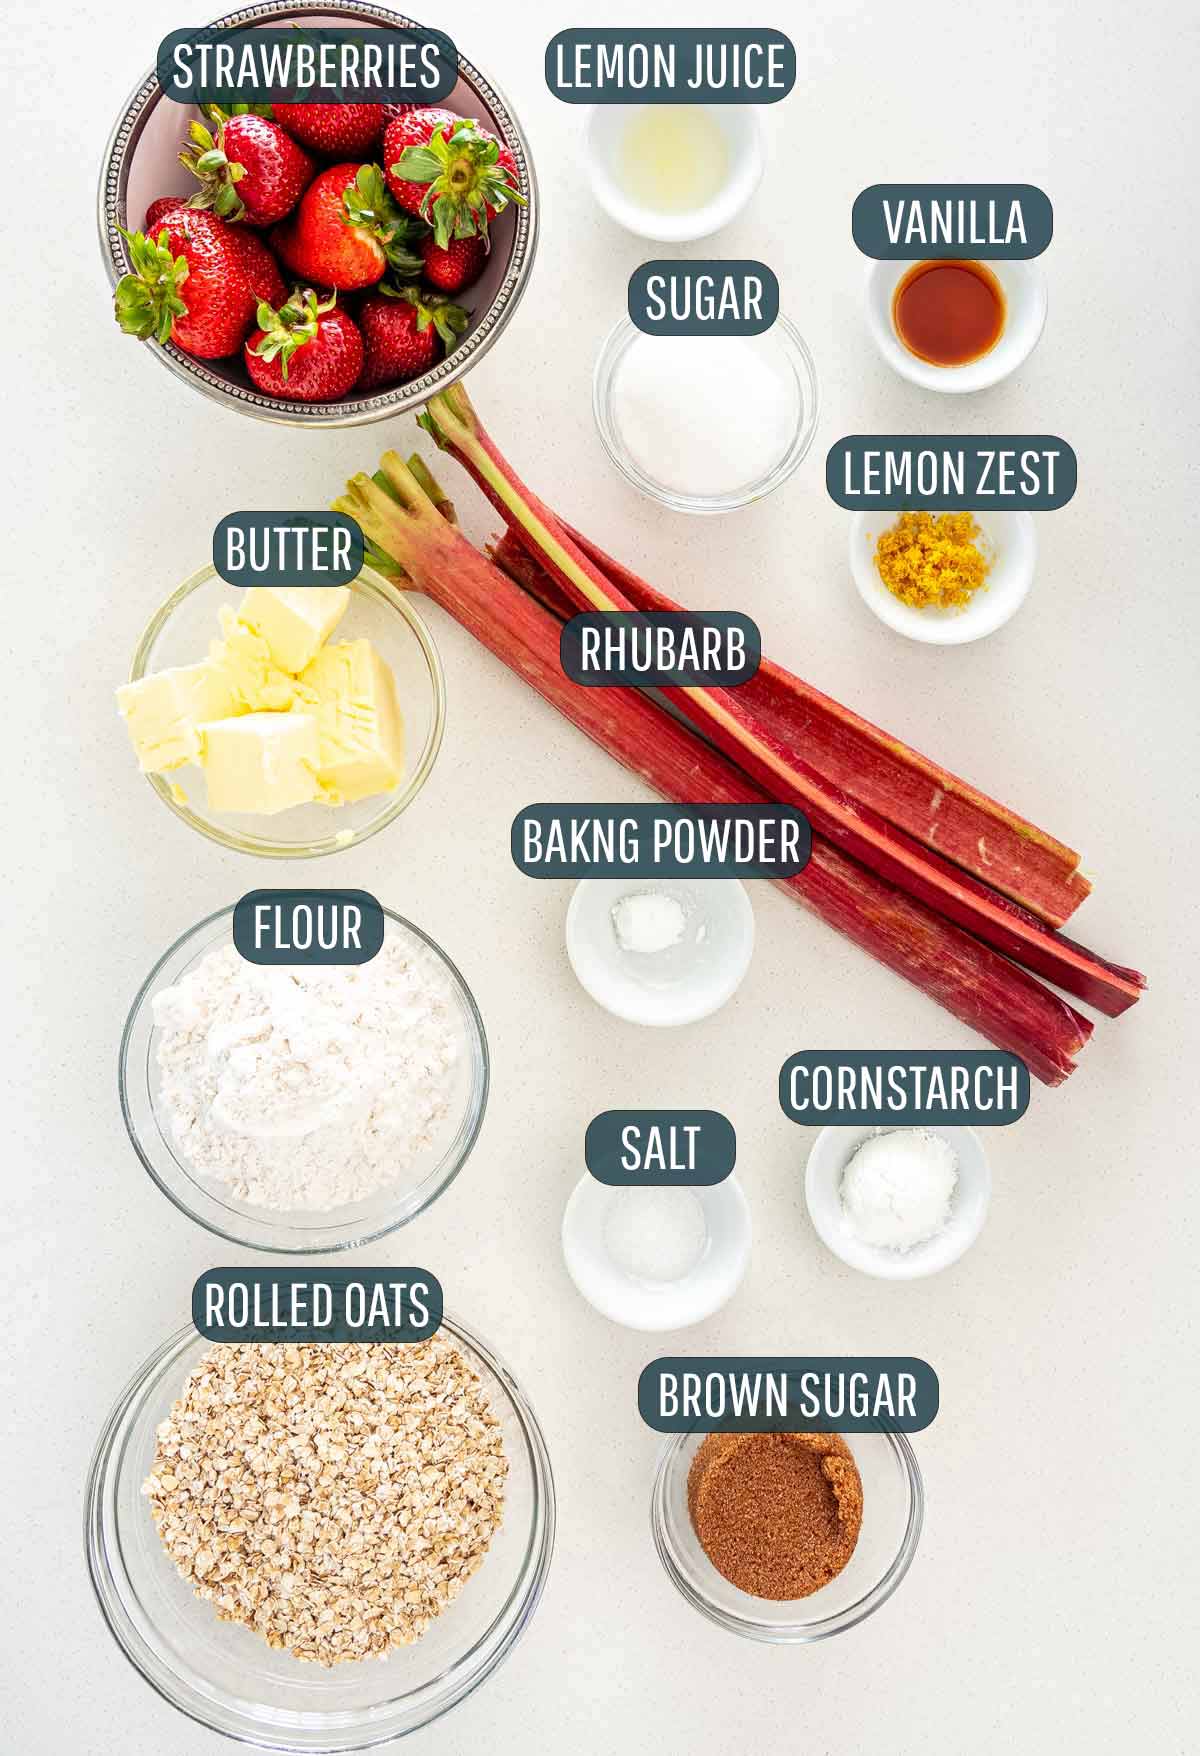 ingredients needed to make strawberry rhubarb bars.